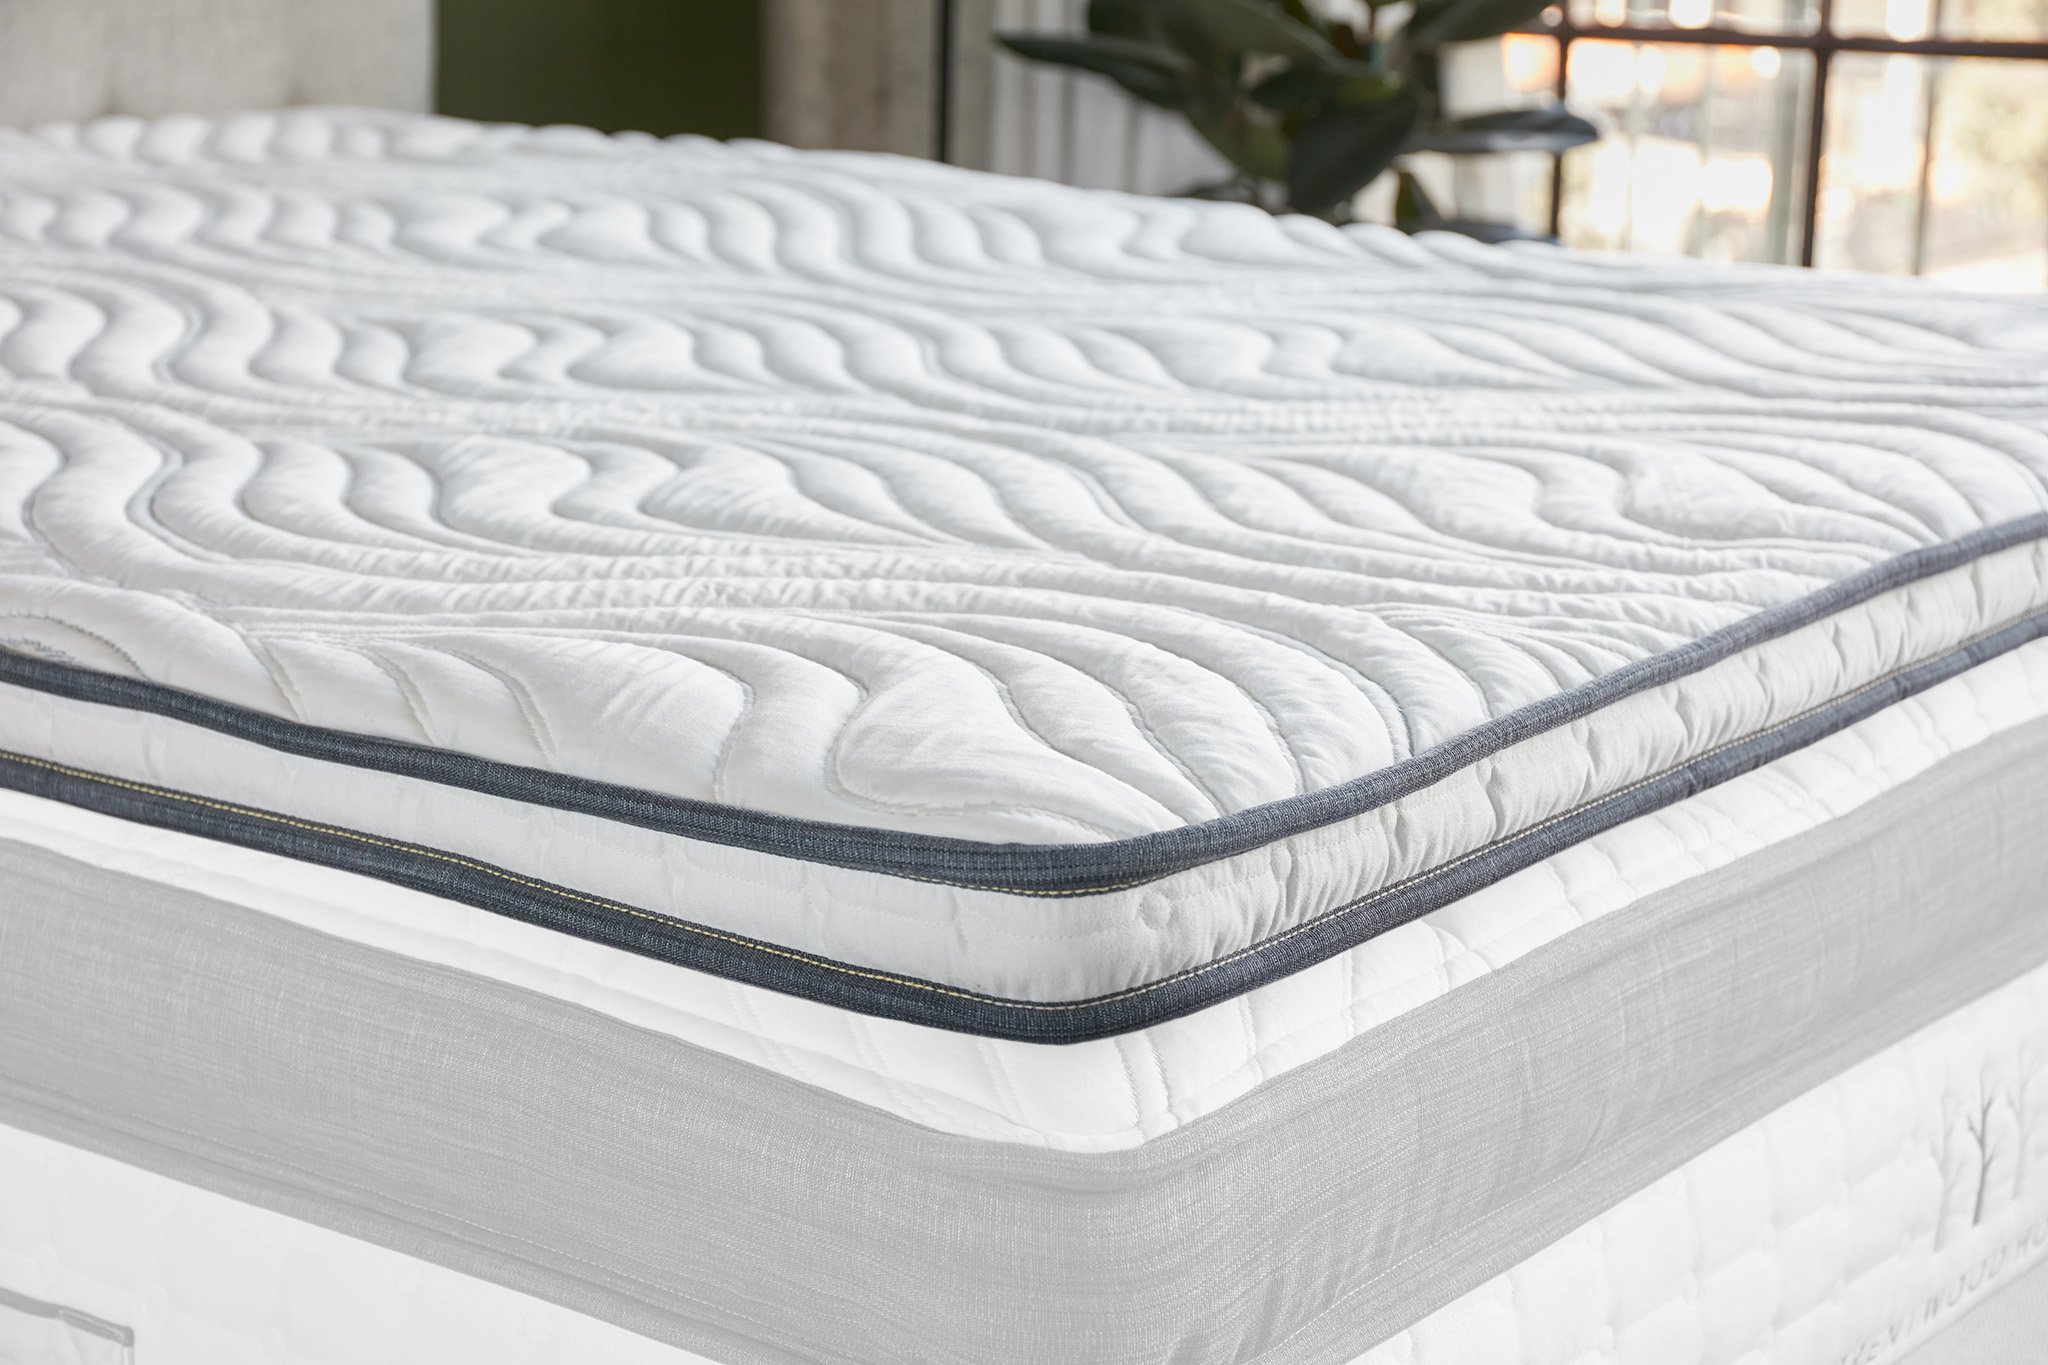 4 memory foam mattress topper authentic comfort